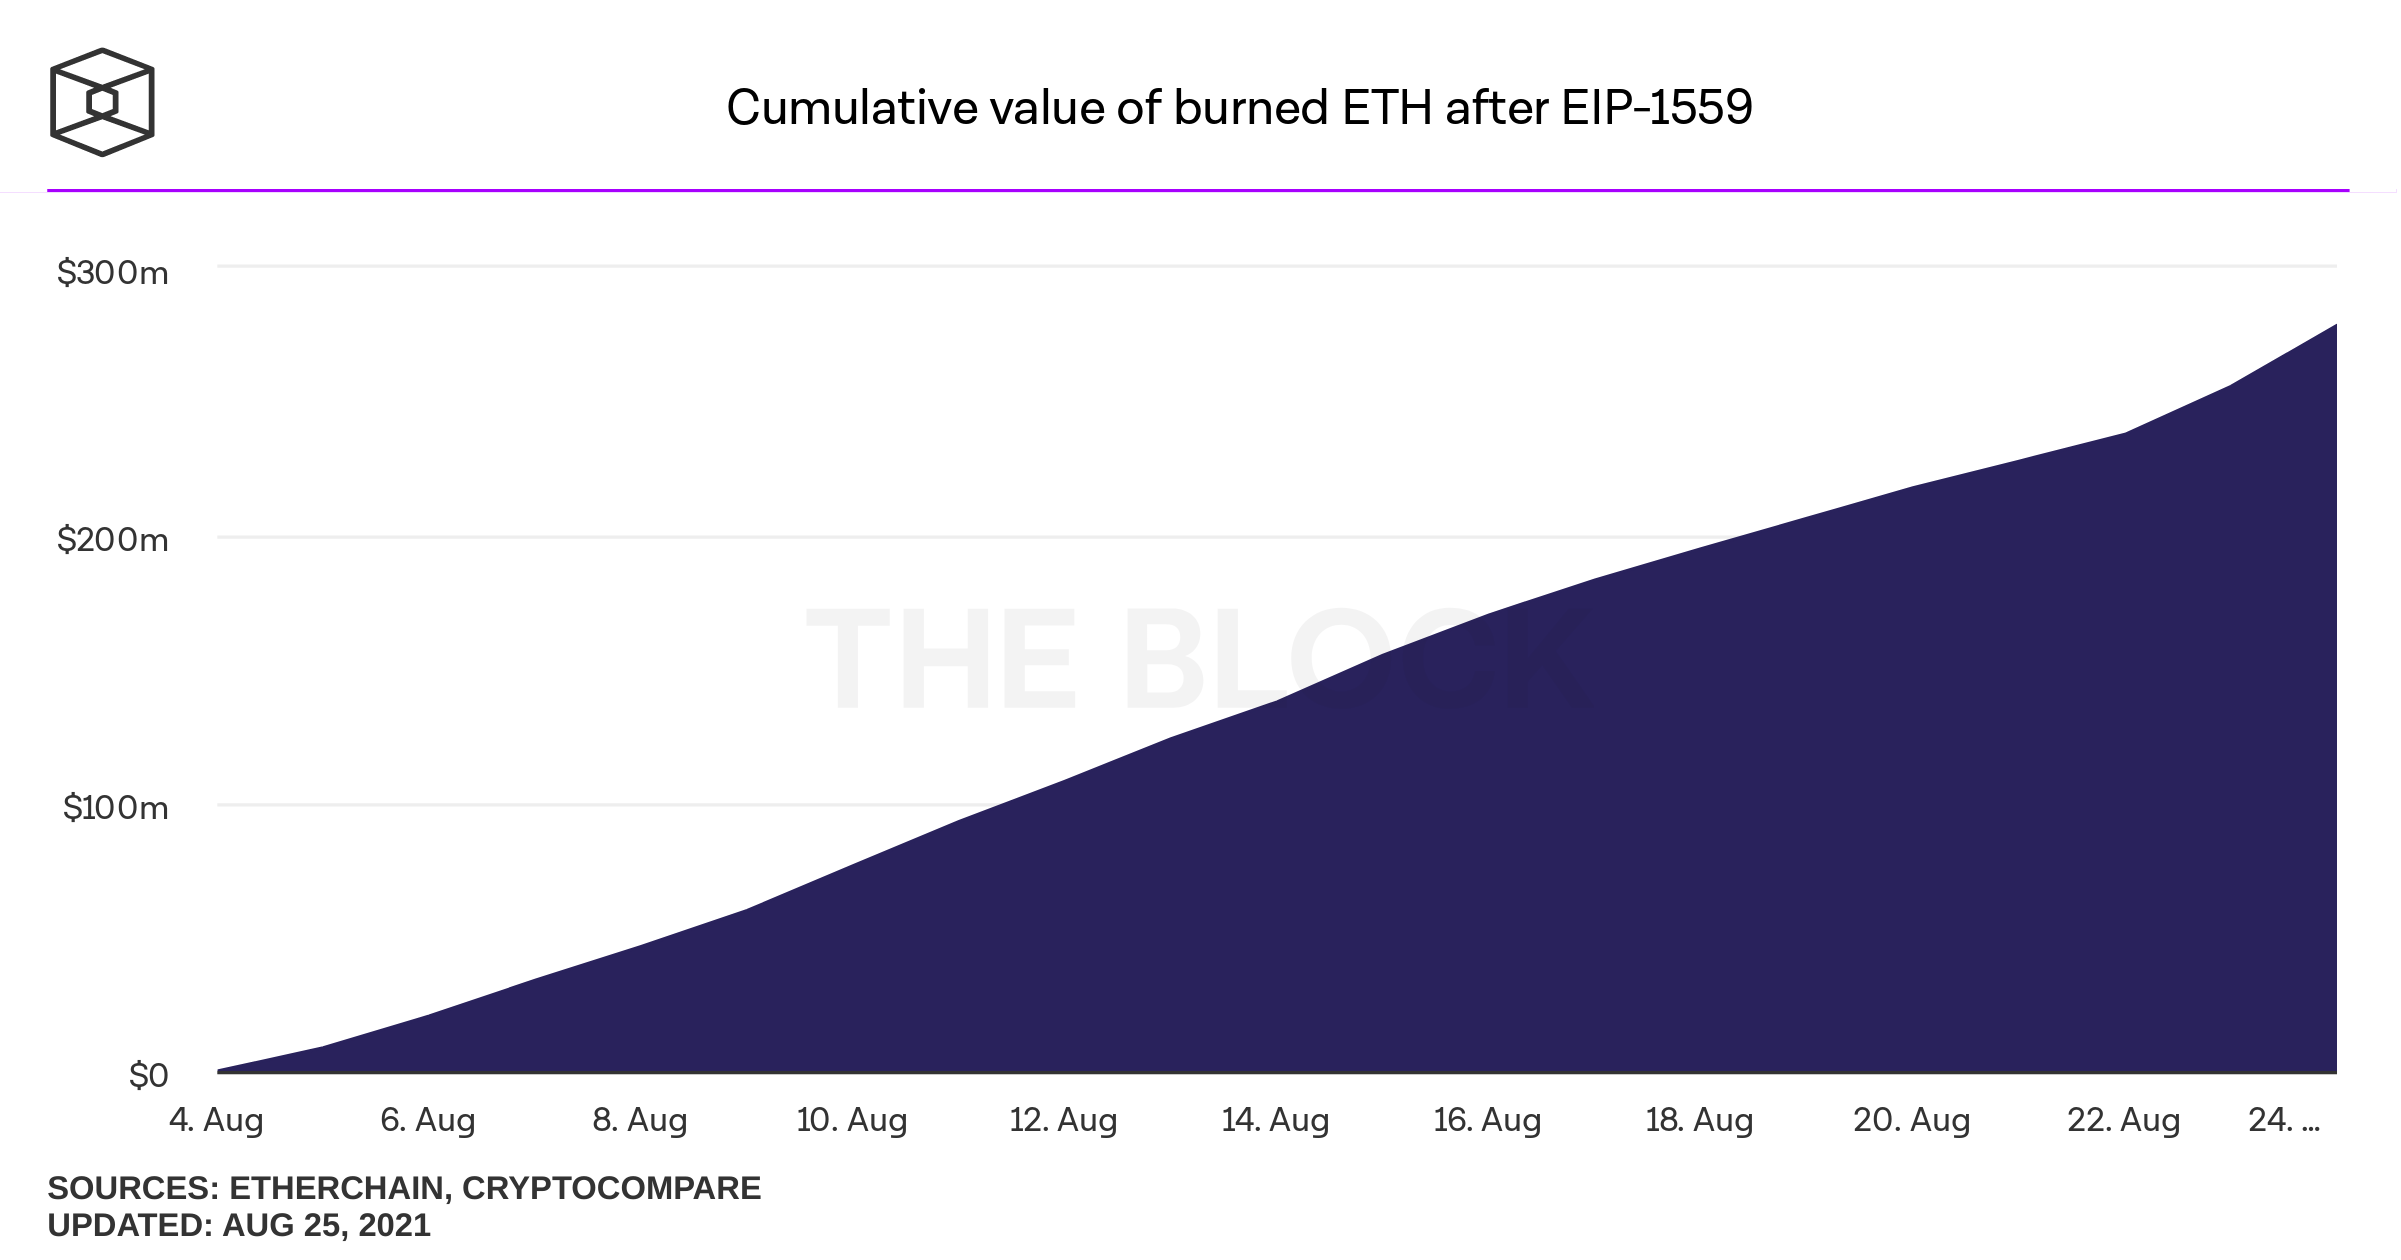 Over 100,000 ETH was burned after Ethereum's London upgrade